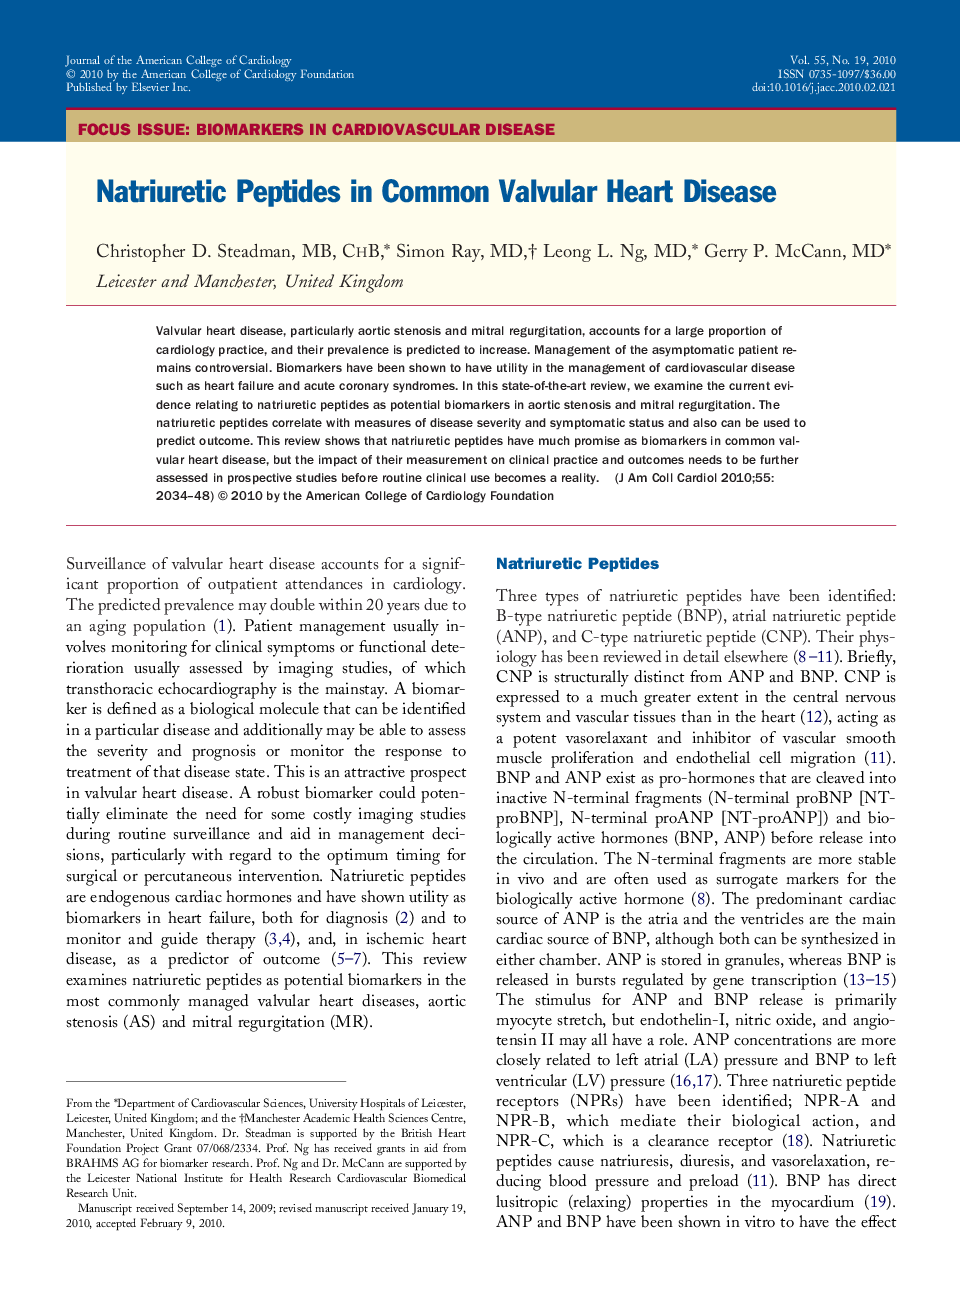 Natriuretic Peptides in Common Valvular Heart Disease 